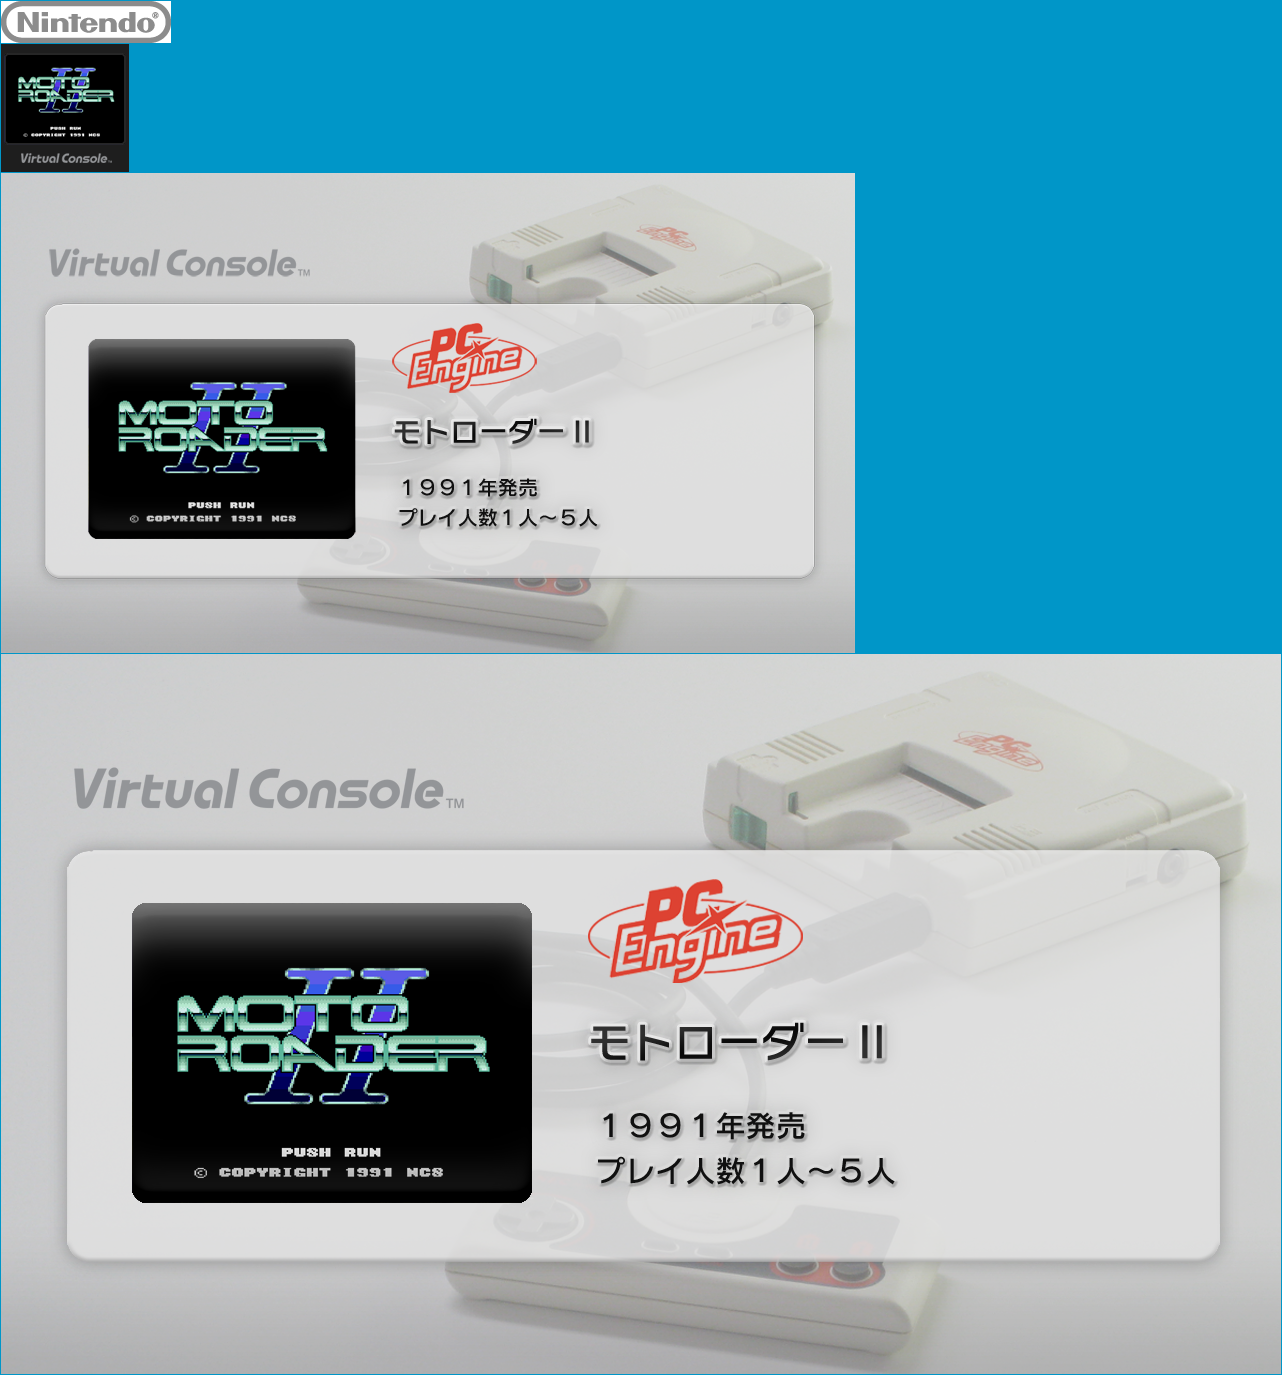 Virtual Console - Moto Roader II